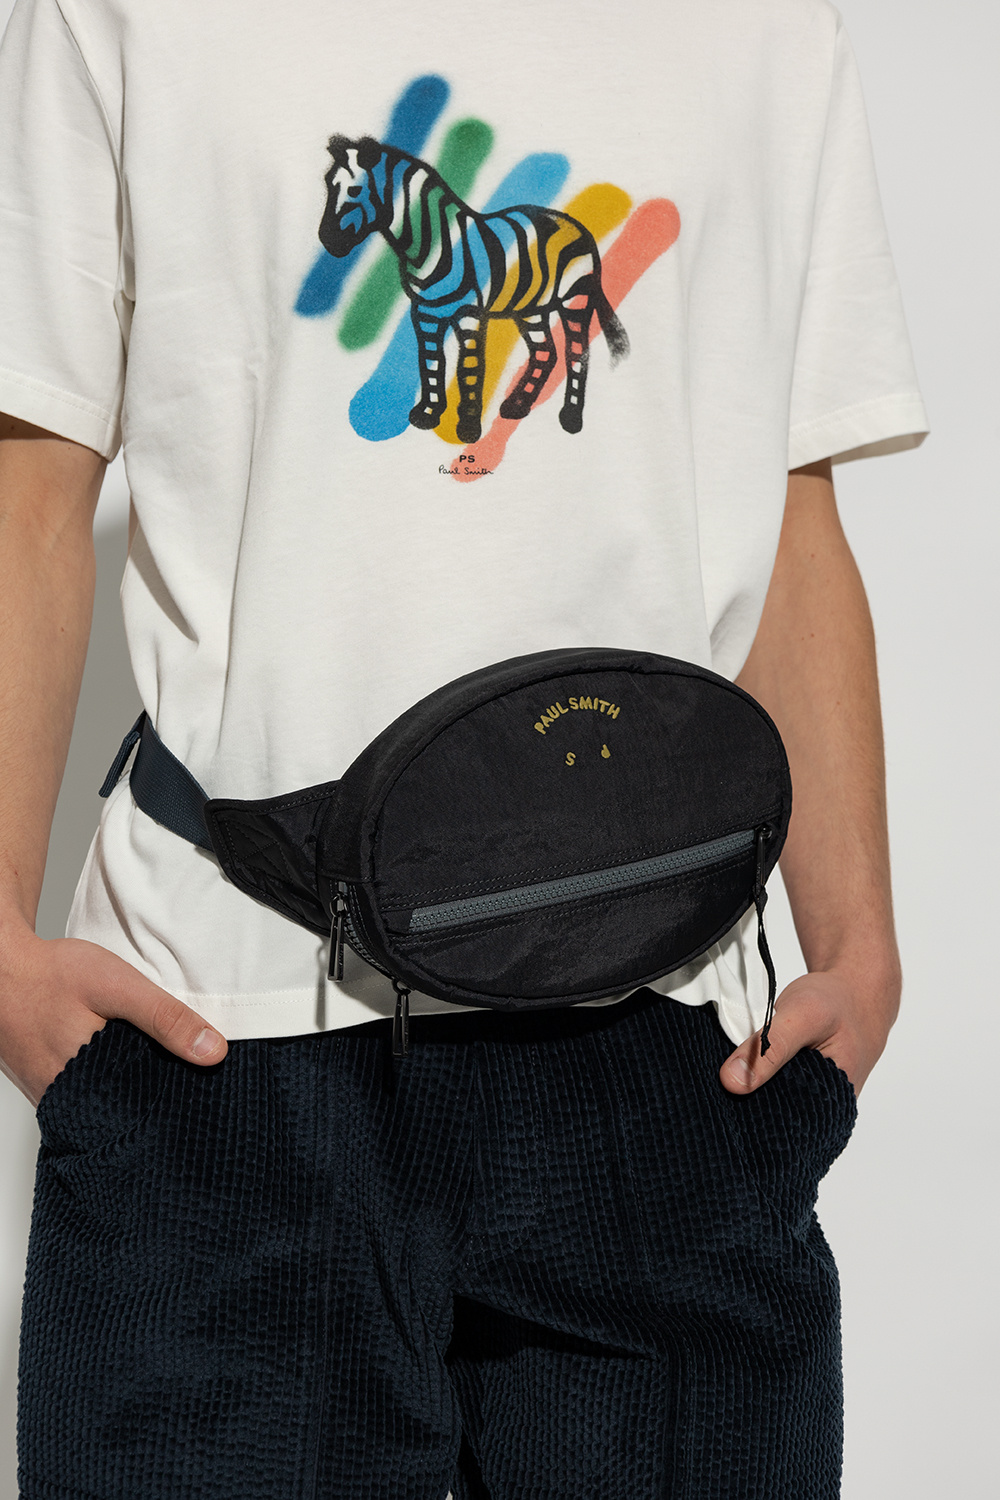 IetpShops Japan - Belt bag with logo PS Paul Smith - Stars really